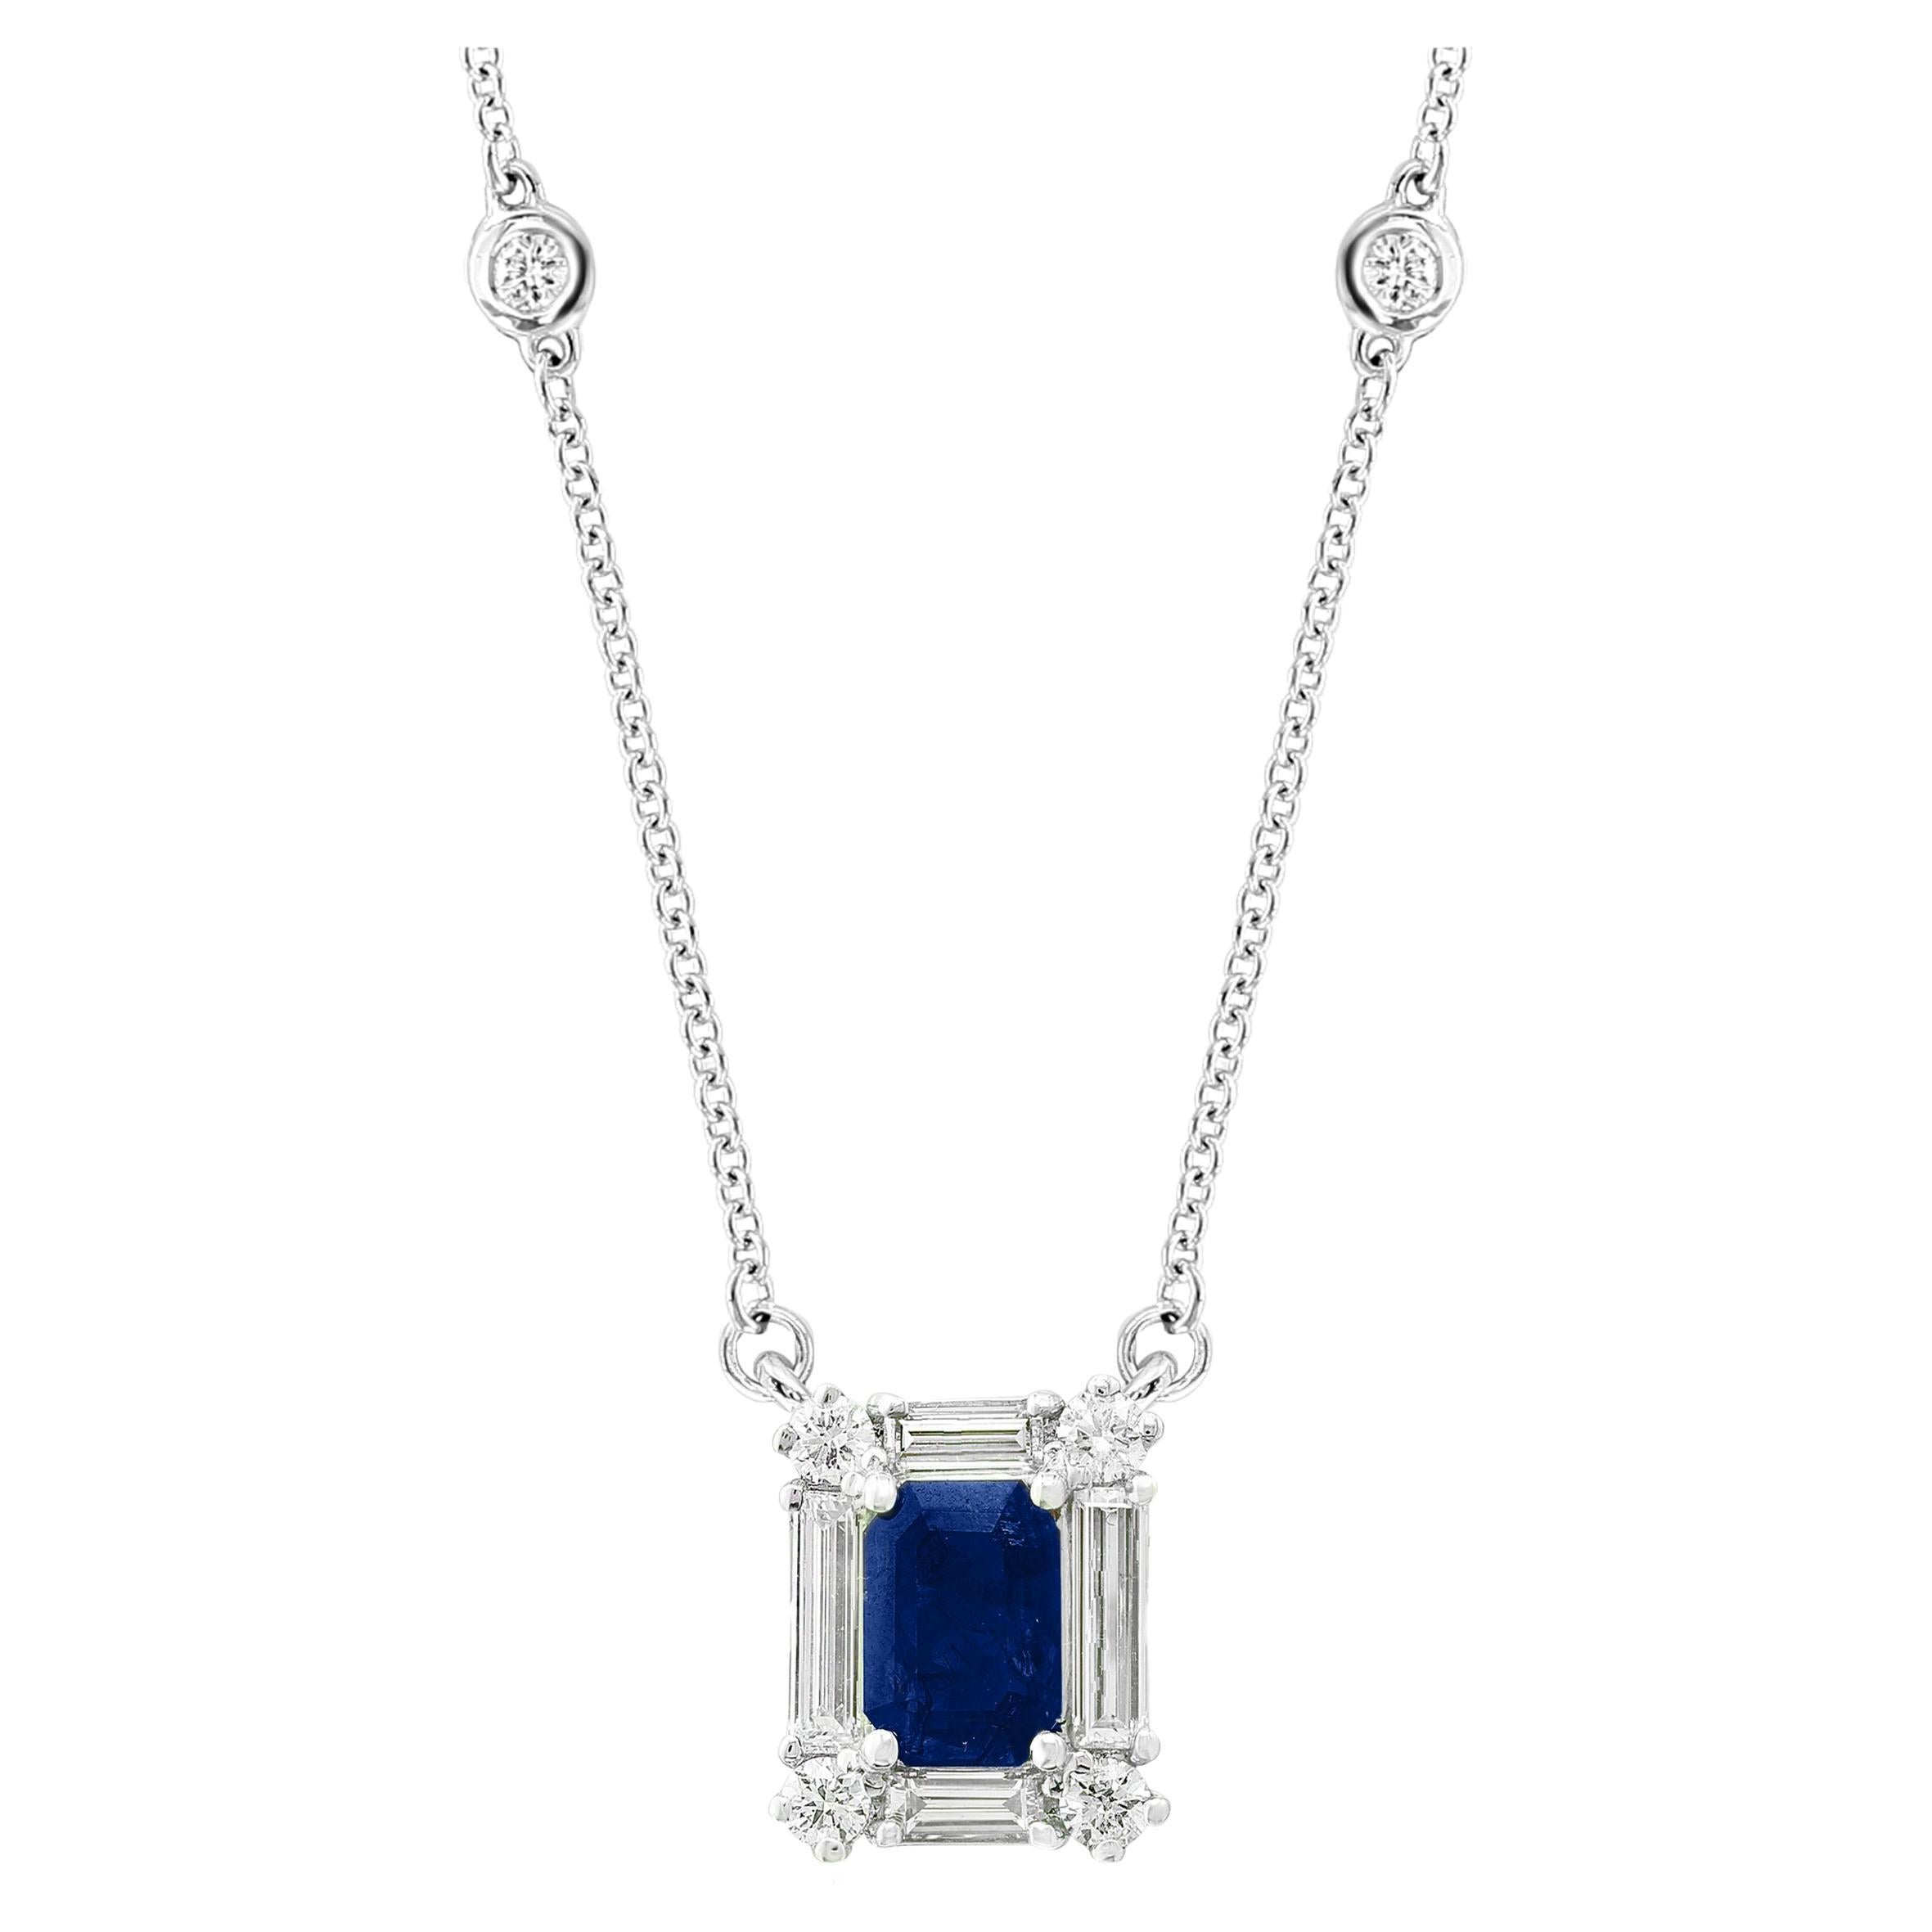 0.78 Carat Emerald Cut Sapphire and Diamond Pendant Necklace in 14K White Gold